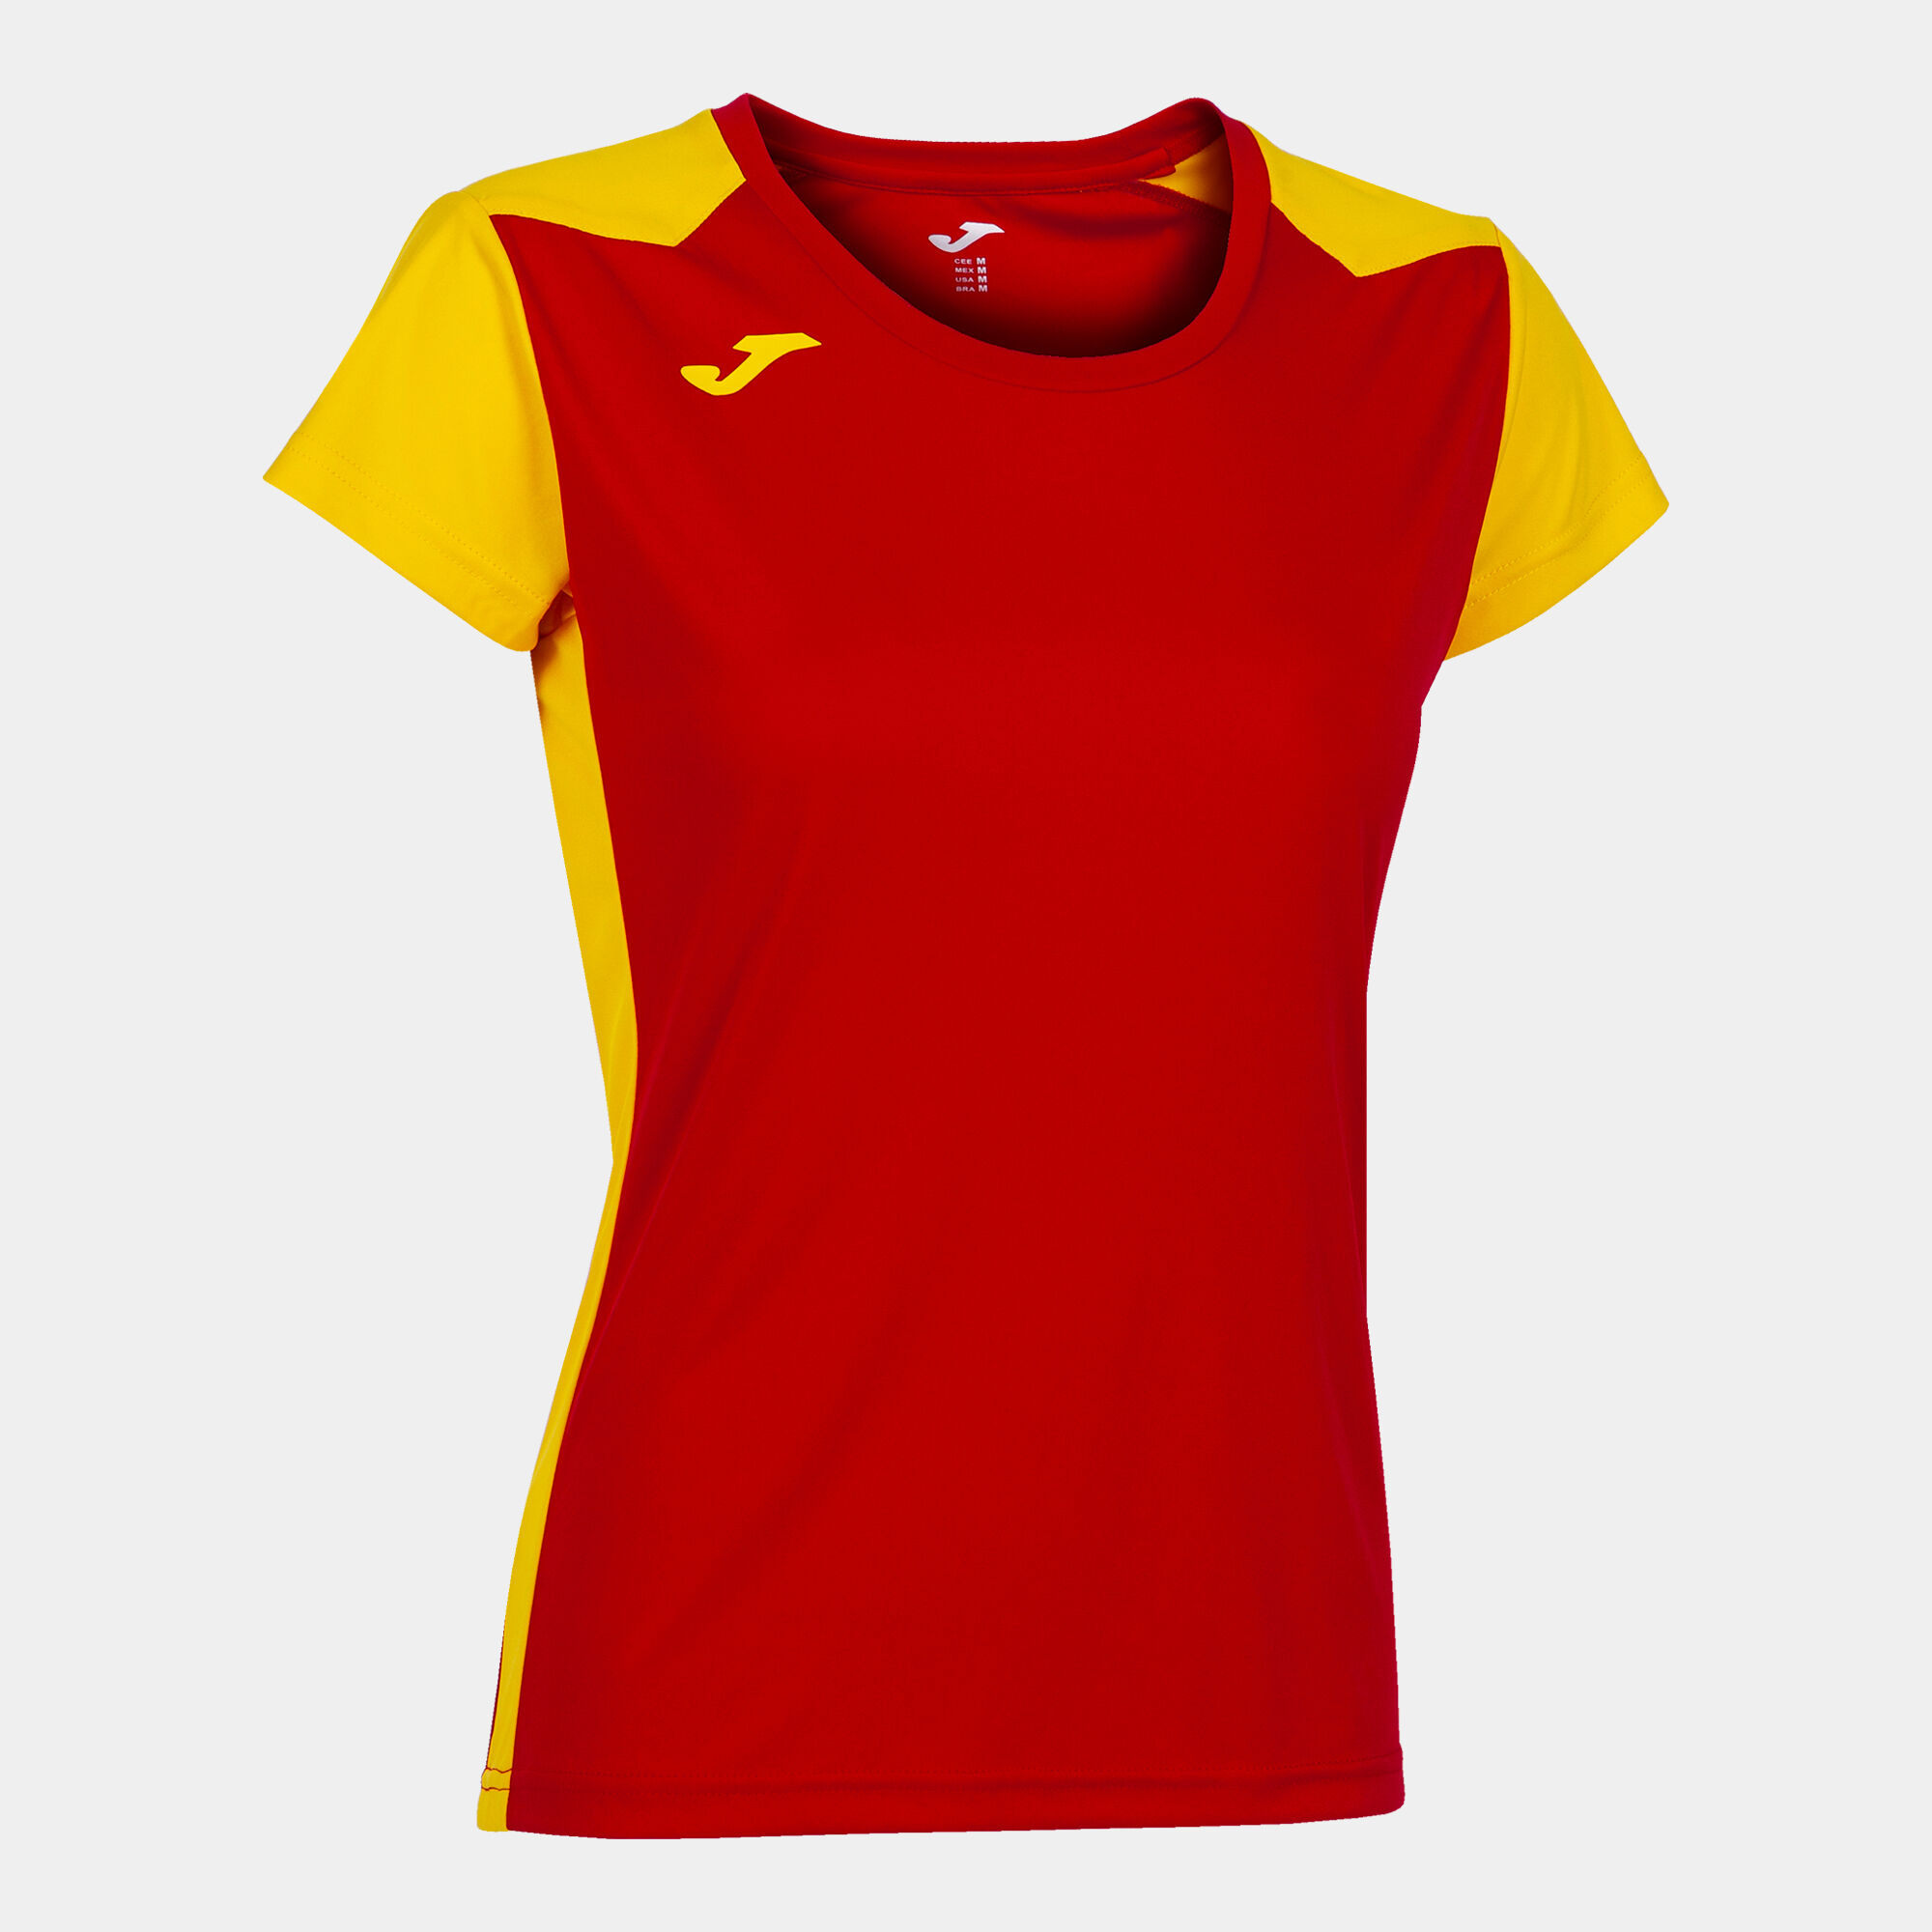 Camiseta manga corta mujer Record II rojo amarillo